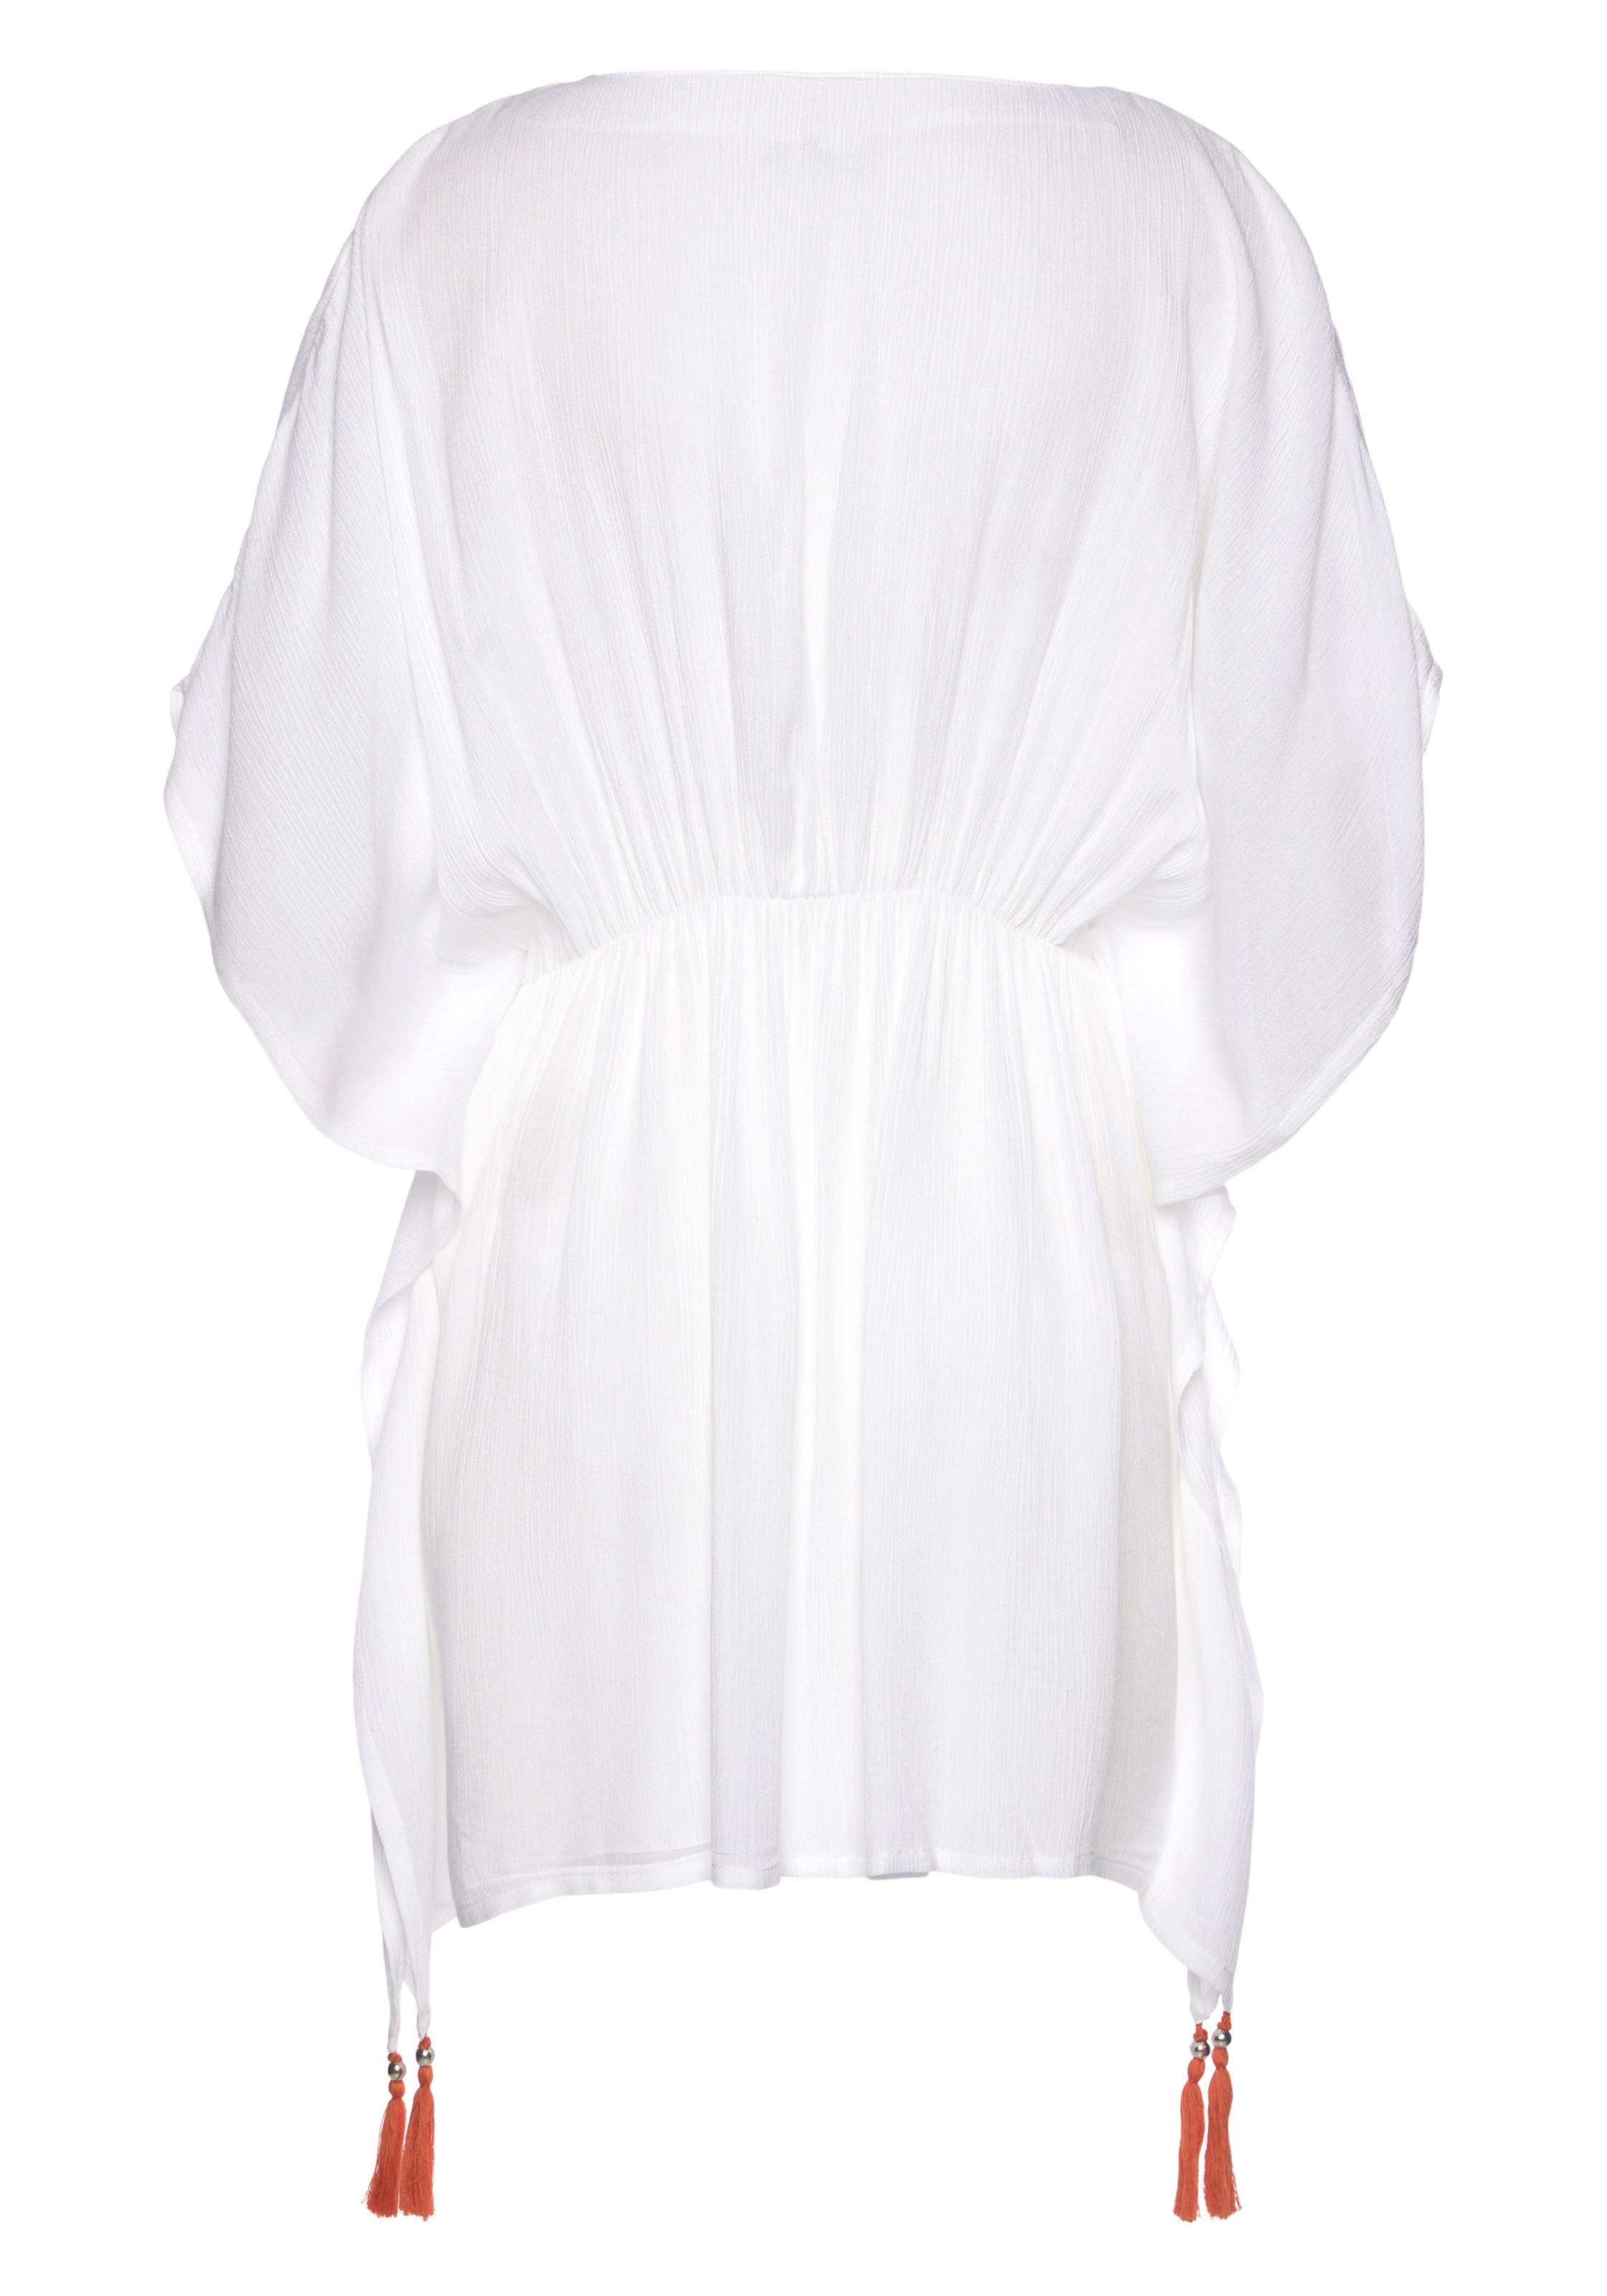 ♕ gekreppter Tunika, transparent Blusenkleid, aus LASCANA Strandmode, Viskose, bei